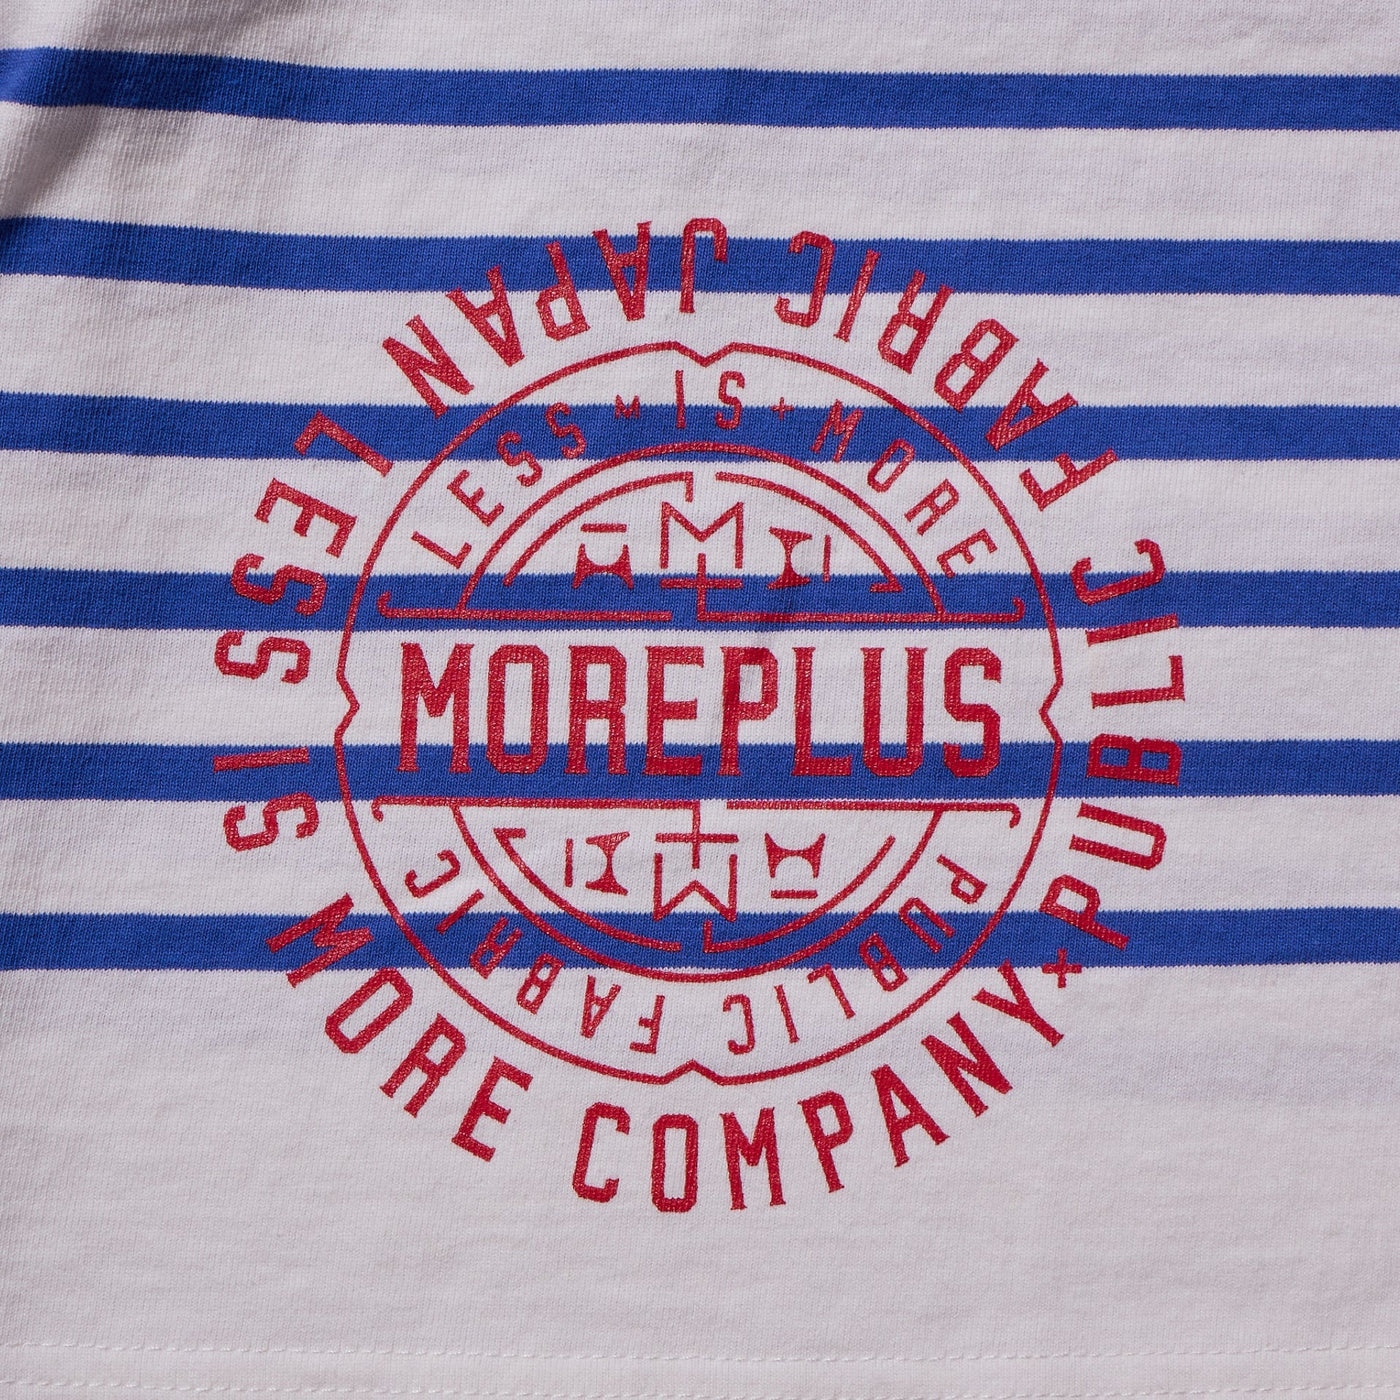 FRENCH BORDER T-SHIRTS - モアプラス moreplus